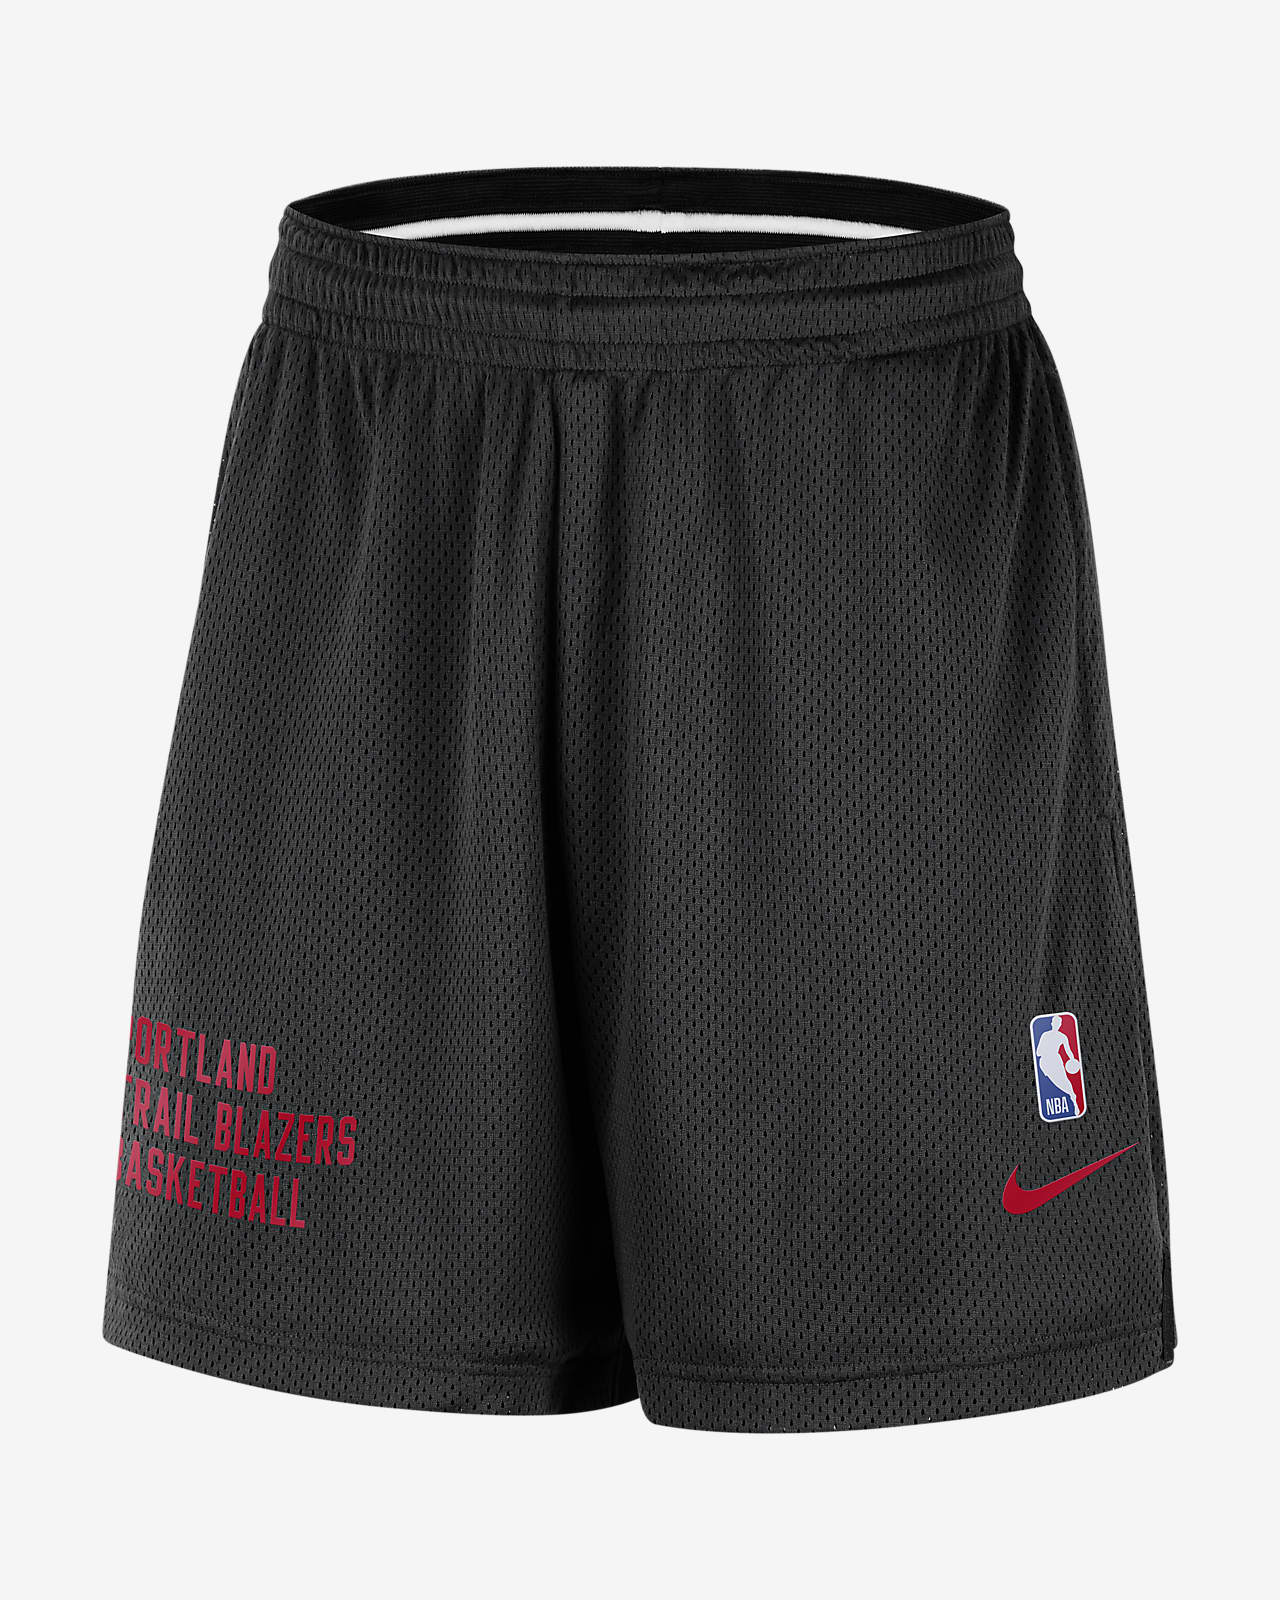 Portland Trail Blazers Men's Nike NBA Mesh Shorts